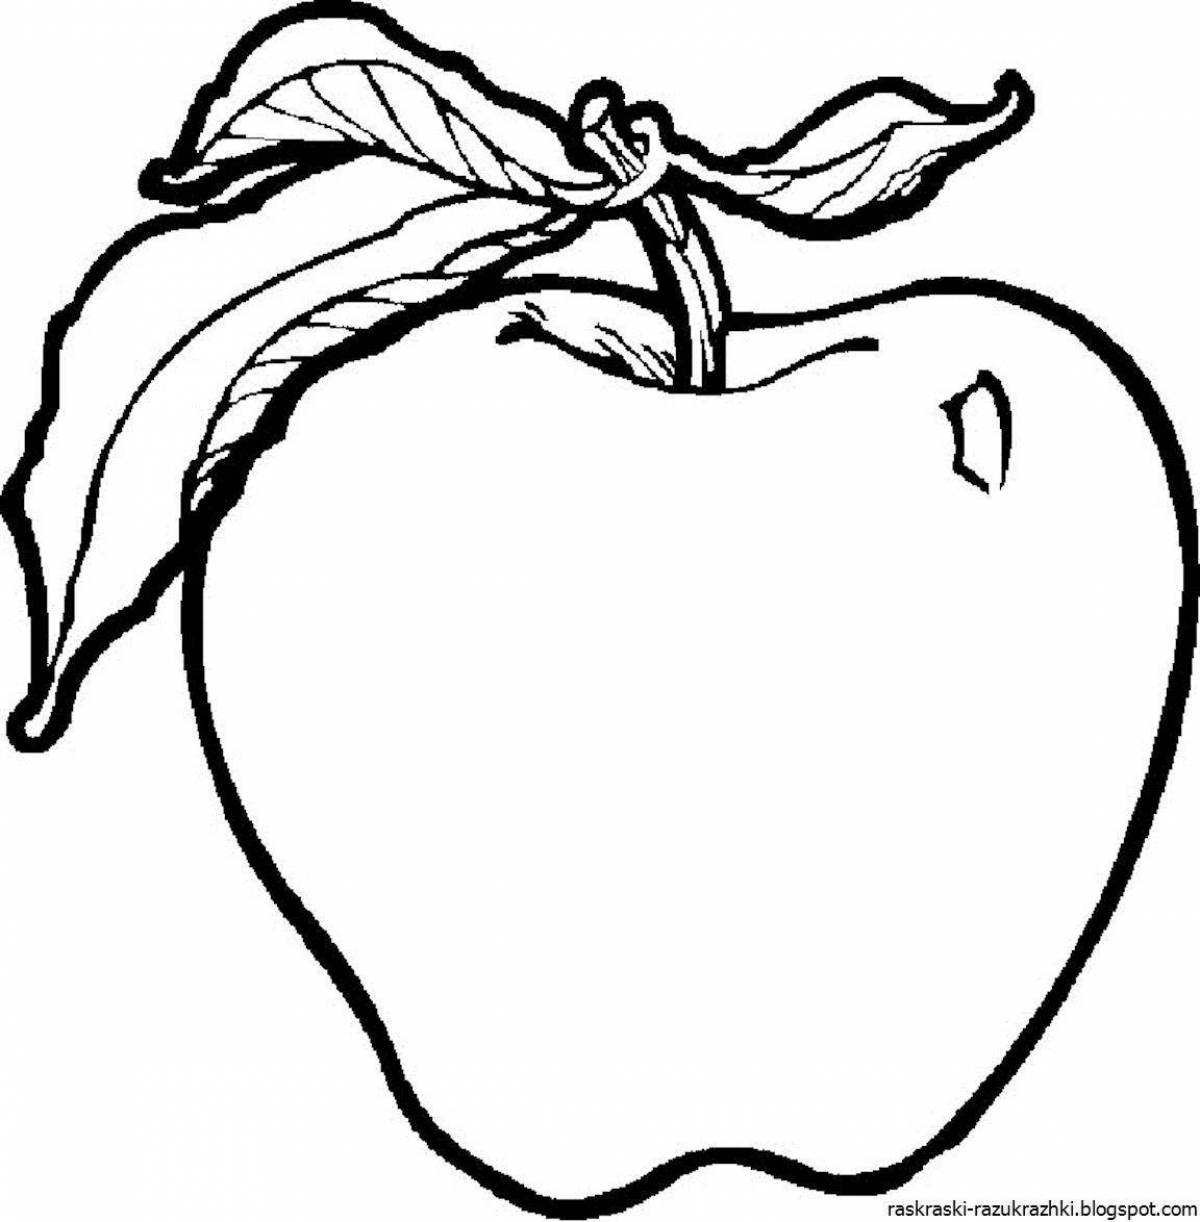 Joyful drawing of an apple for children